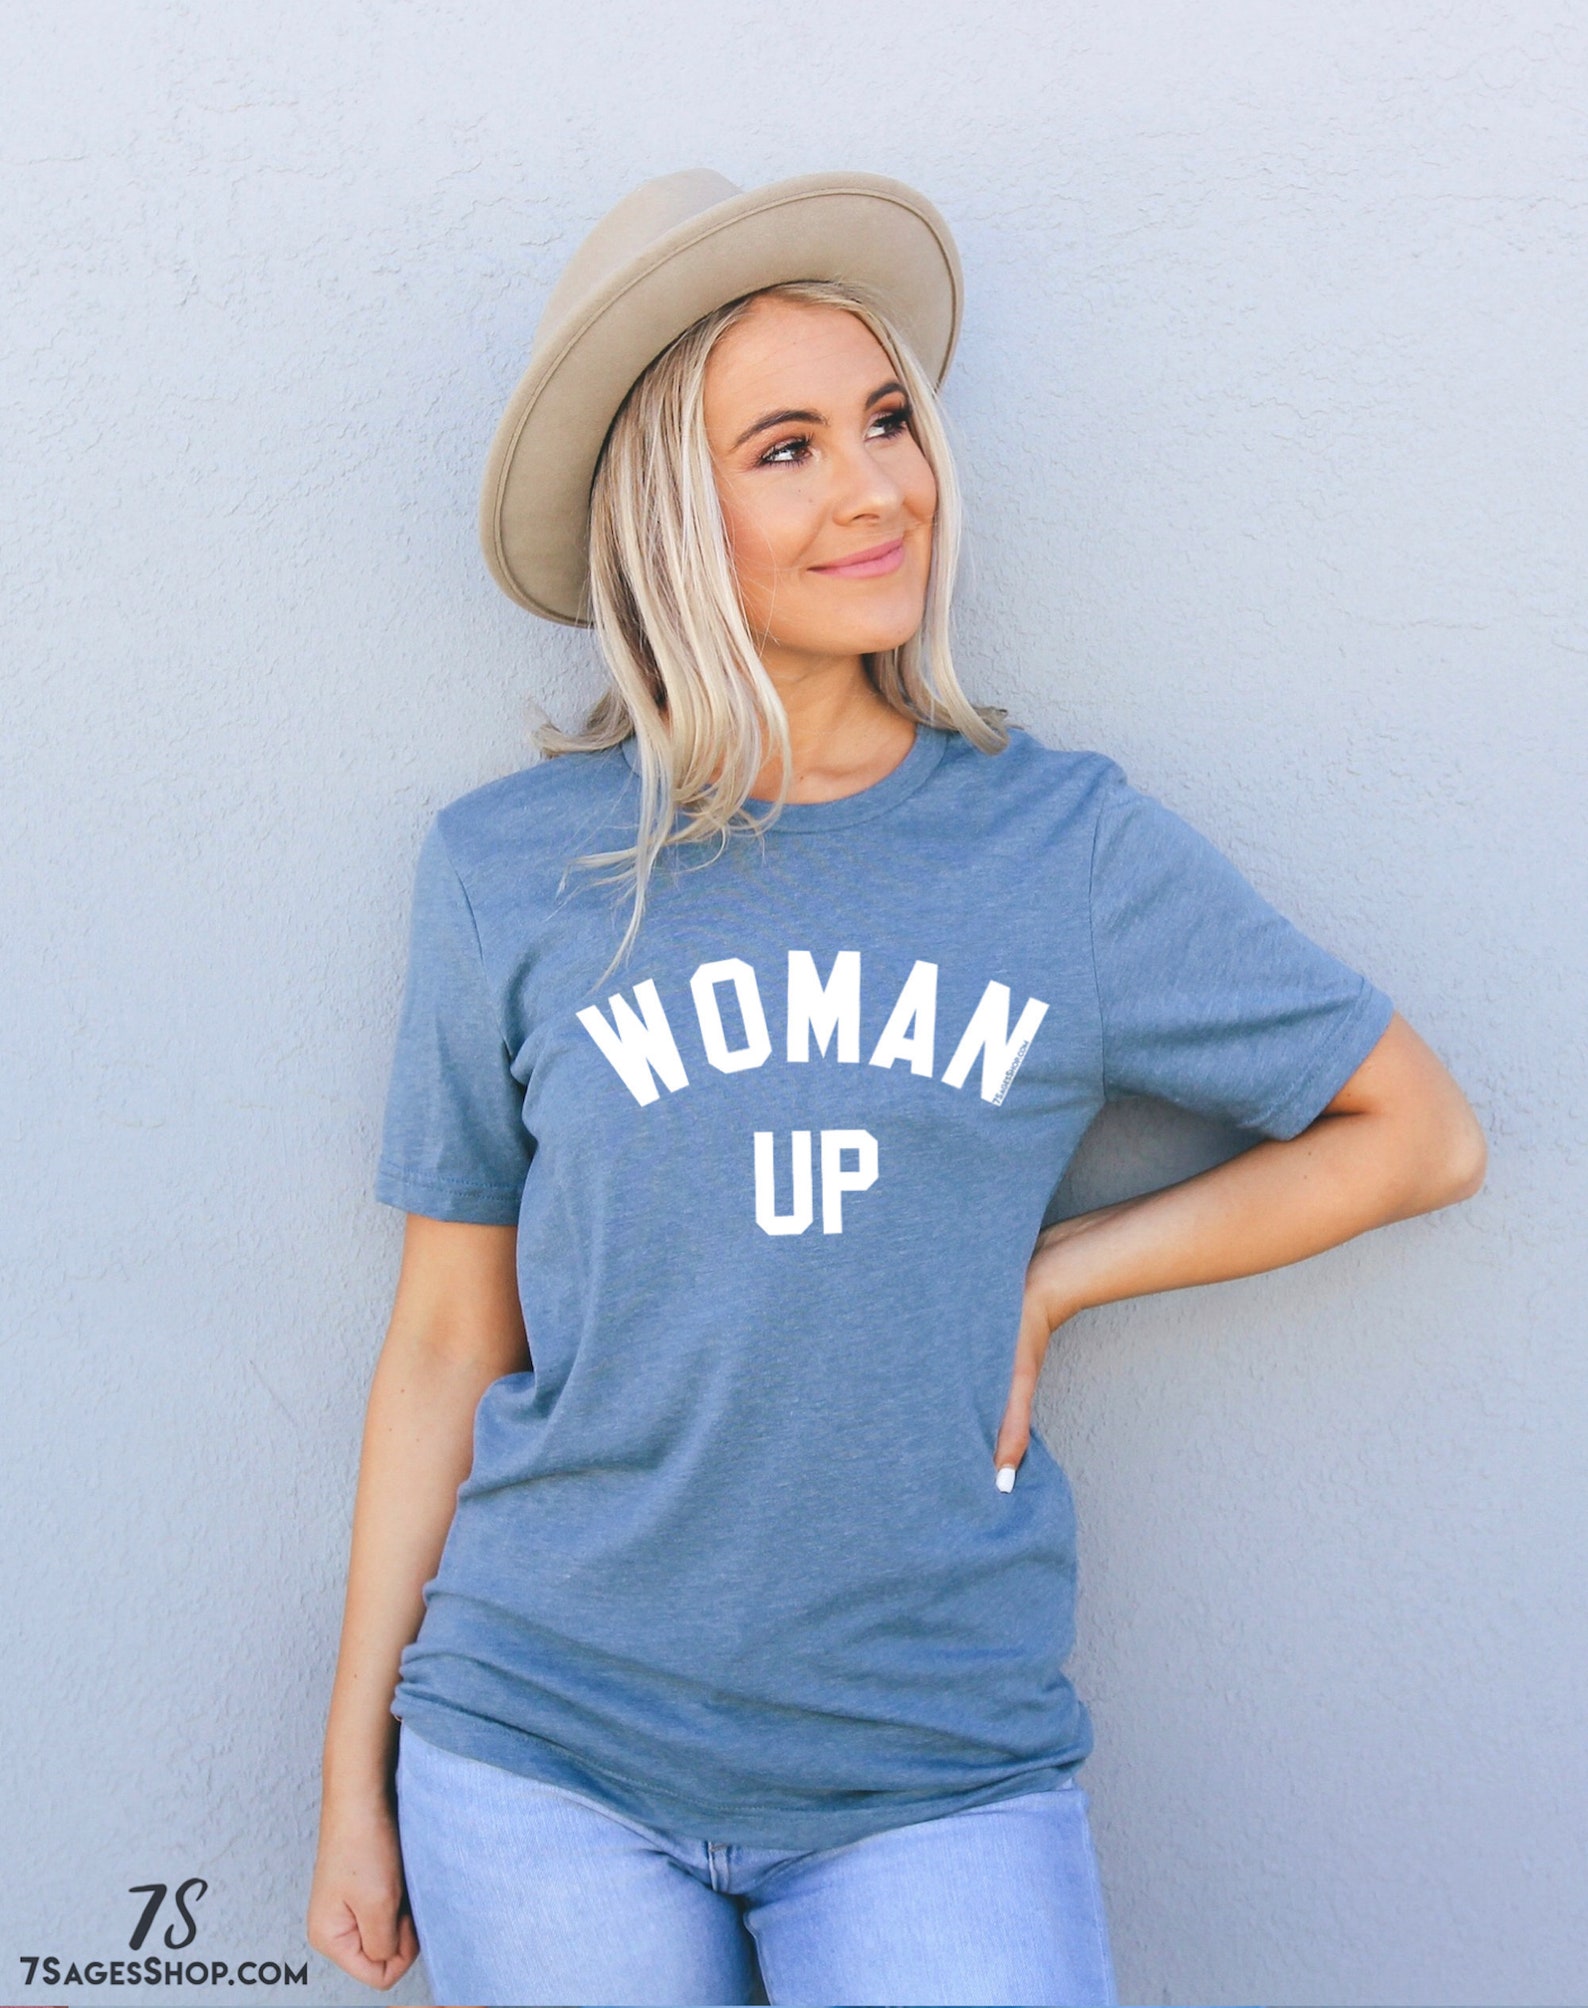 Woman Up Shirt Feminist Shirt Woman Up T Shirt Feminism | Etsy